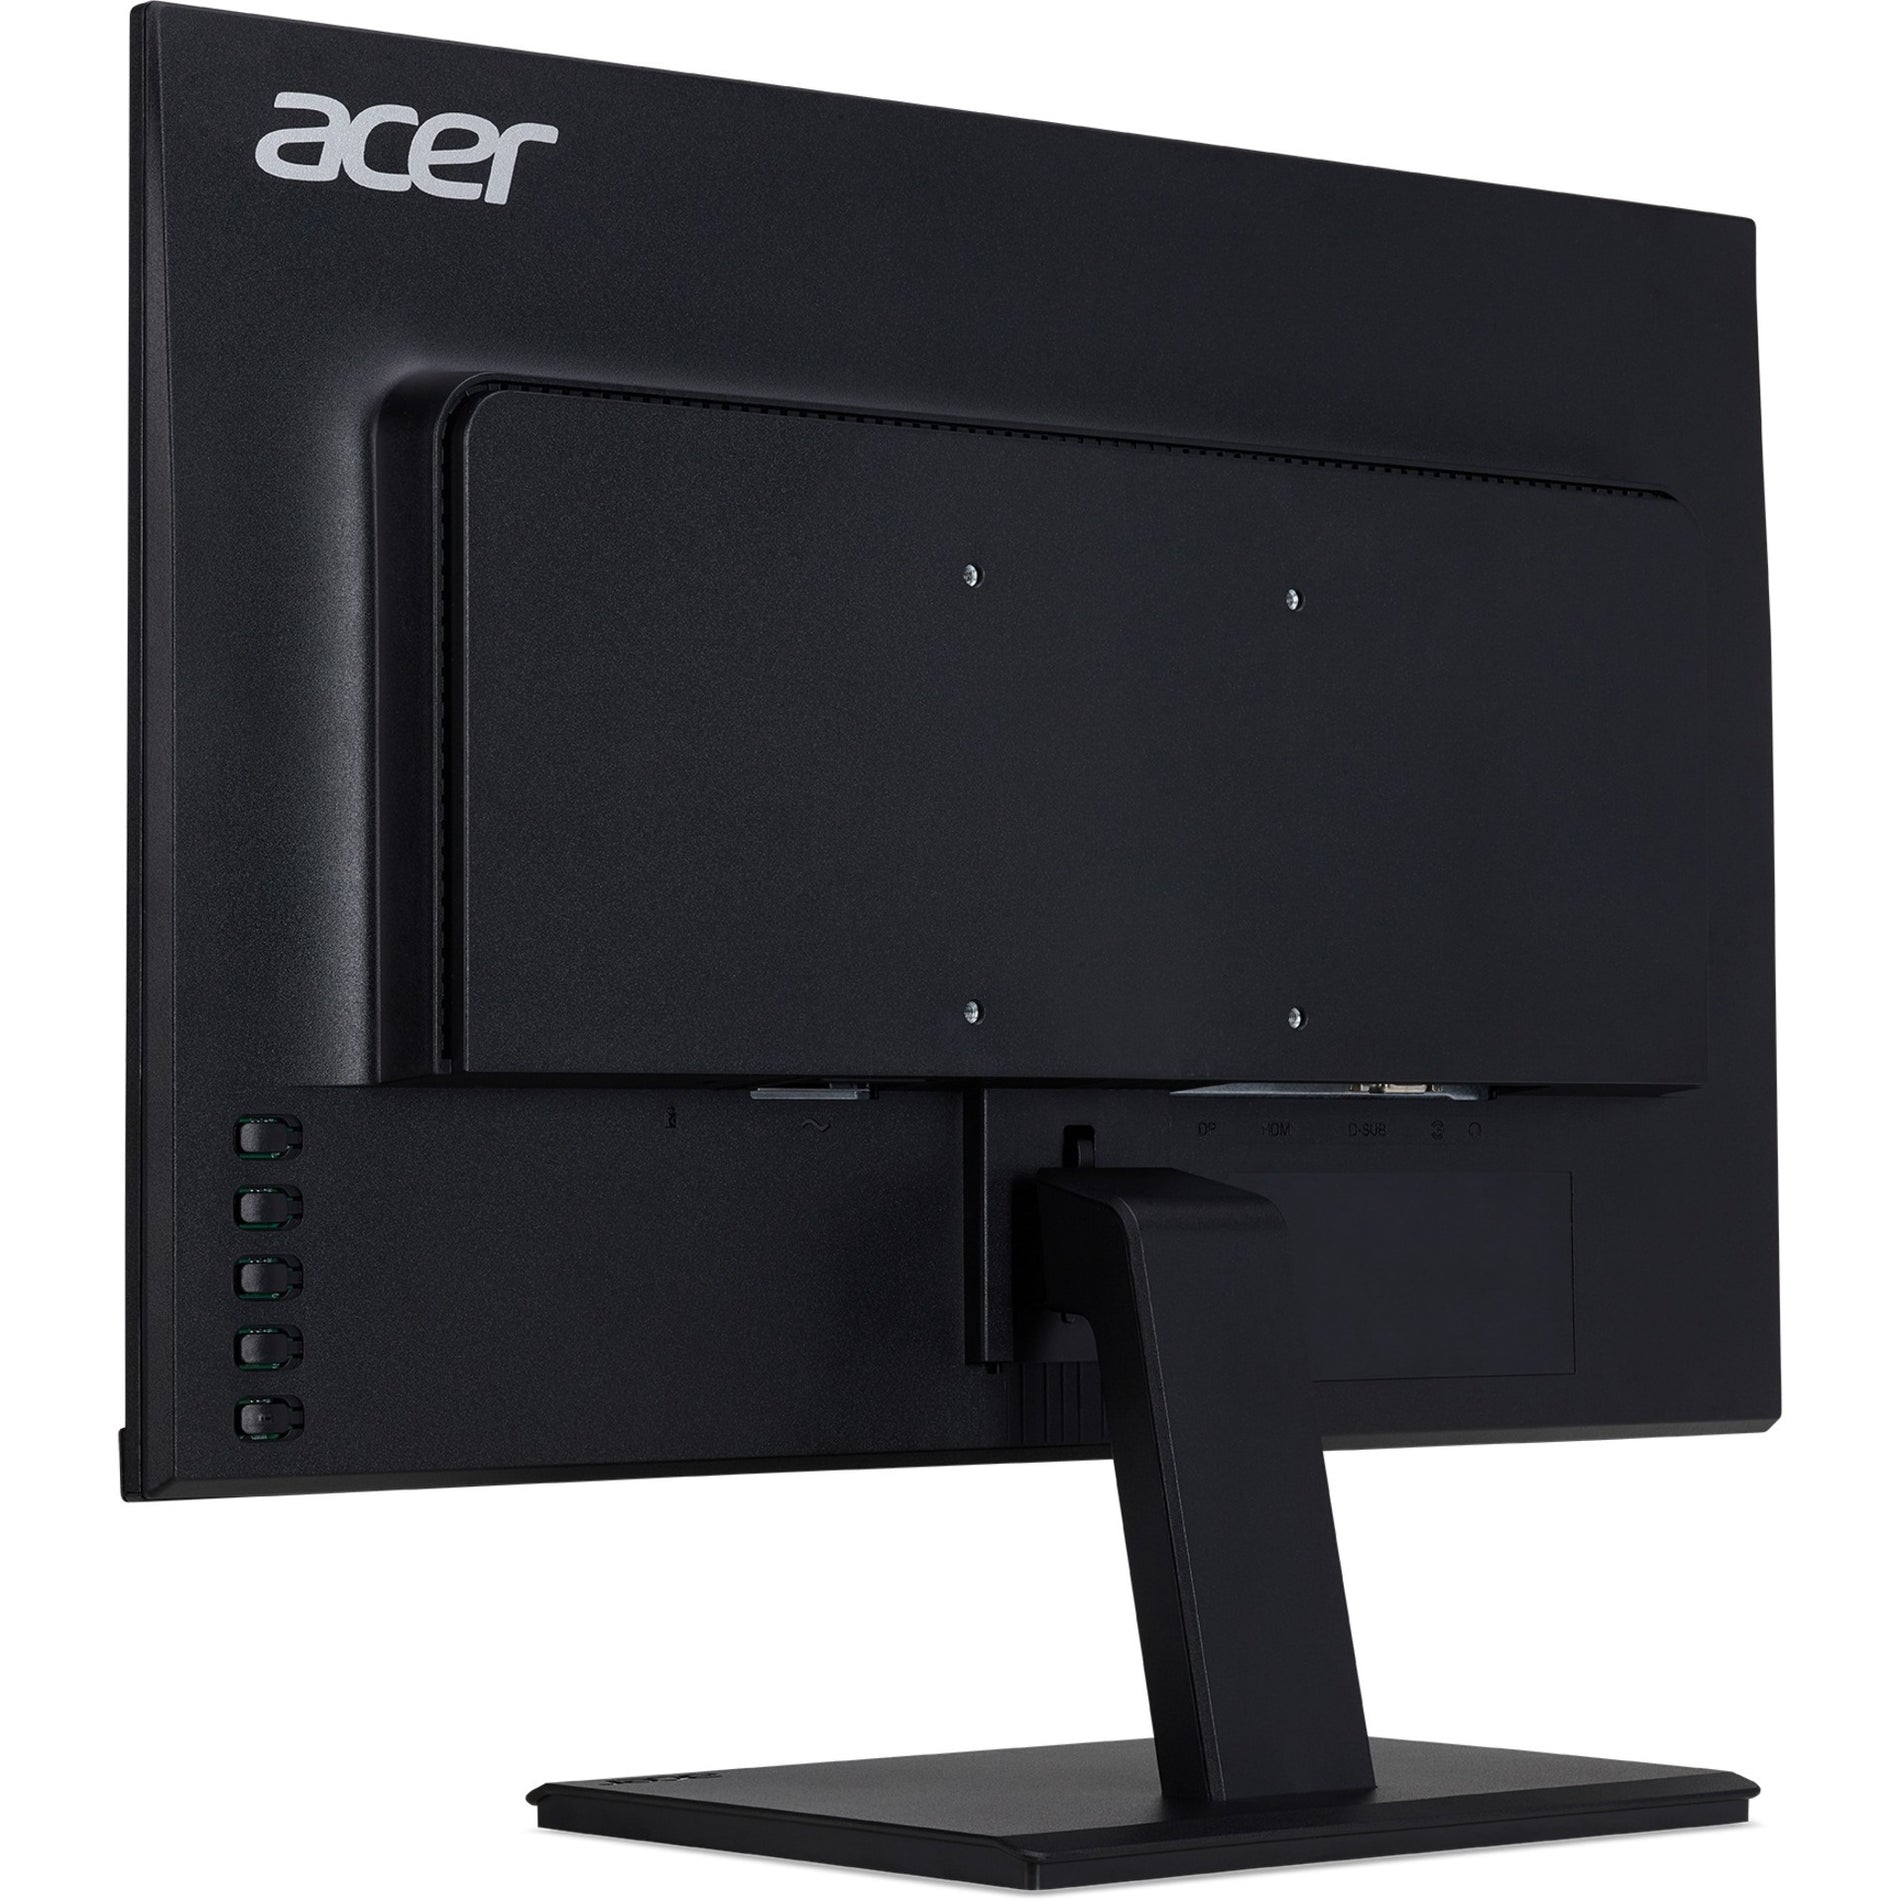 Acer UM.QB7AA.C01 B247Y C 23.8" Full HD LCD Monitor, Black - Adaptive Sync, USB Hub